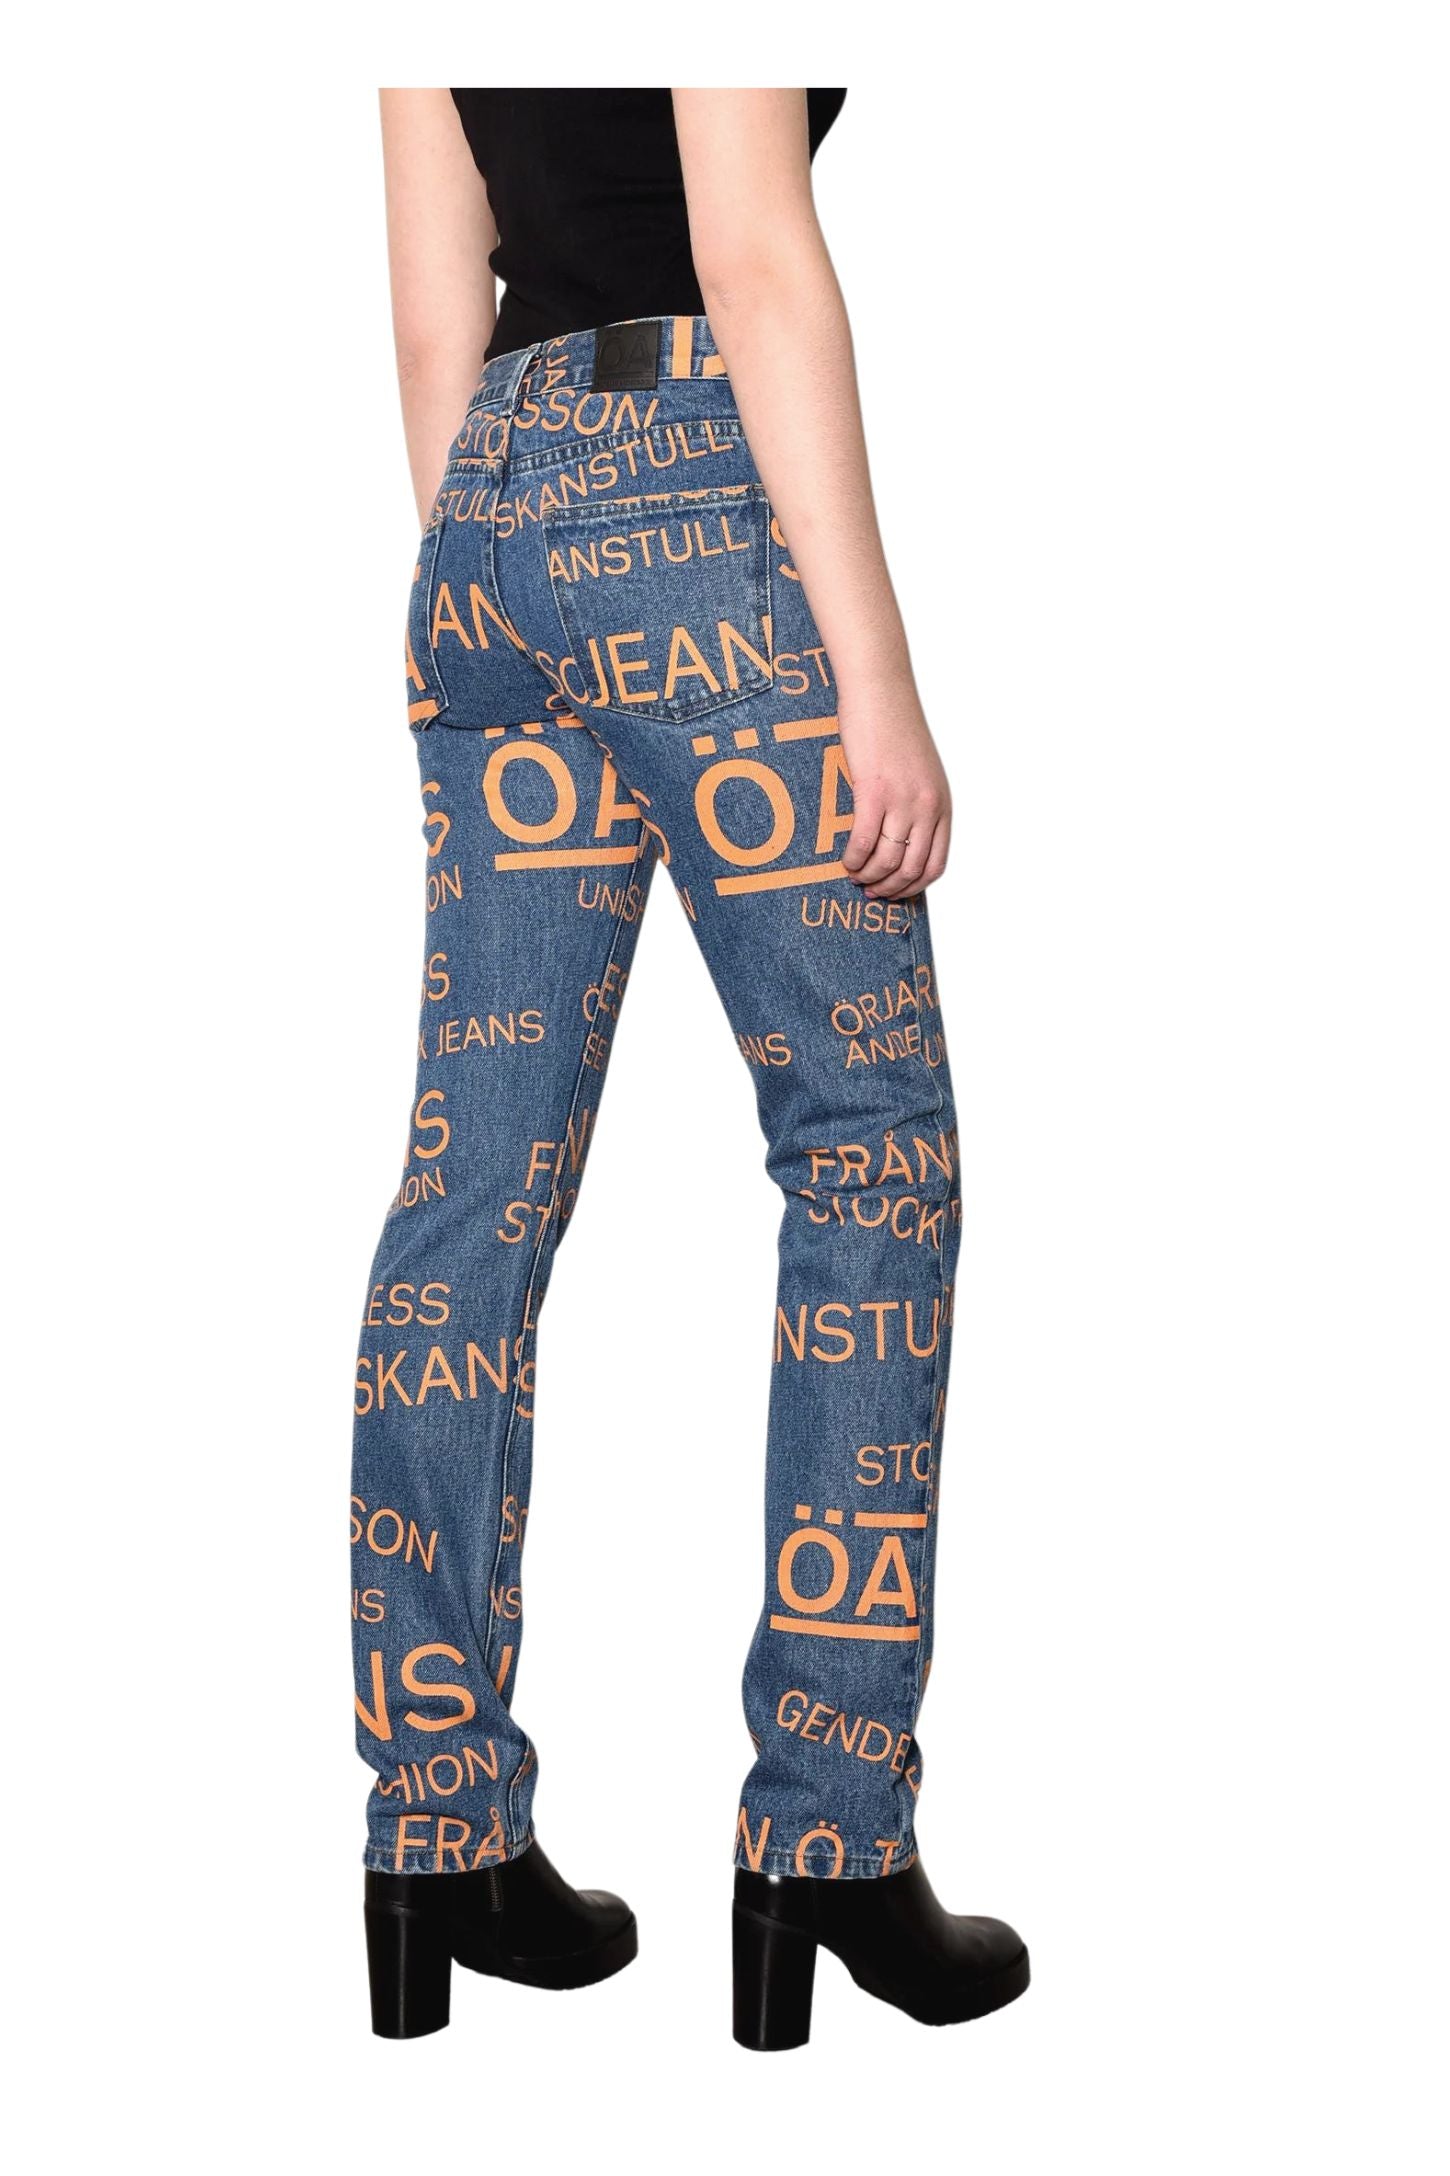 23,748 Jeans Logo Images, Stock Photos & Vectors | Shutterstock